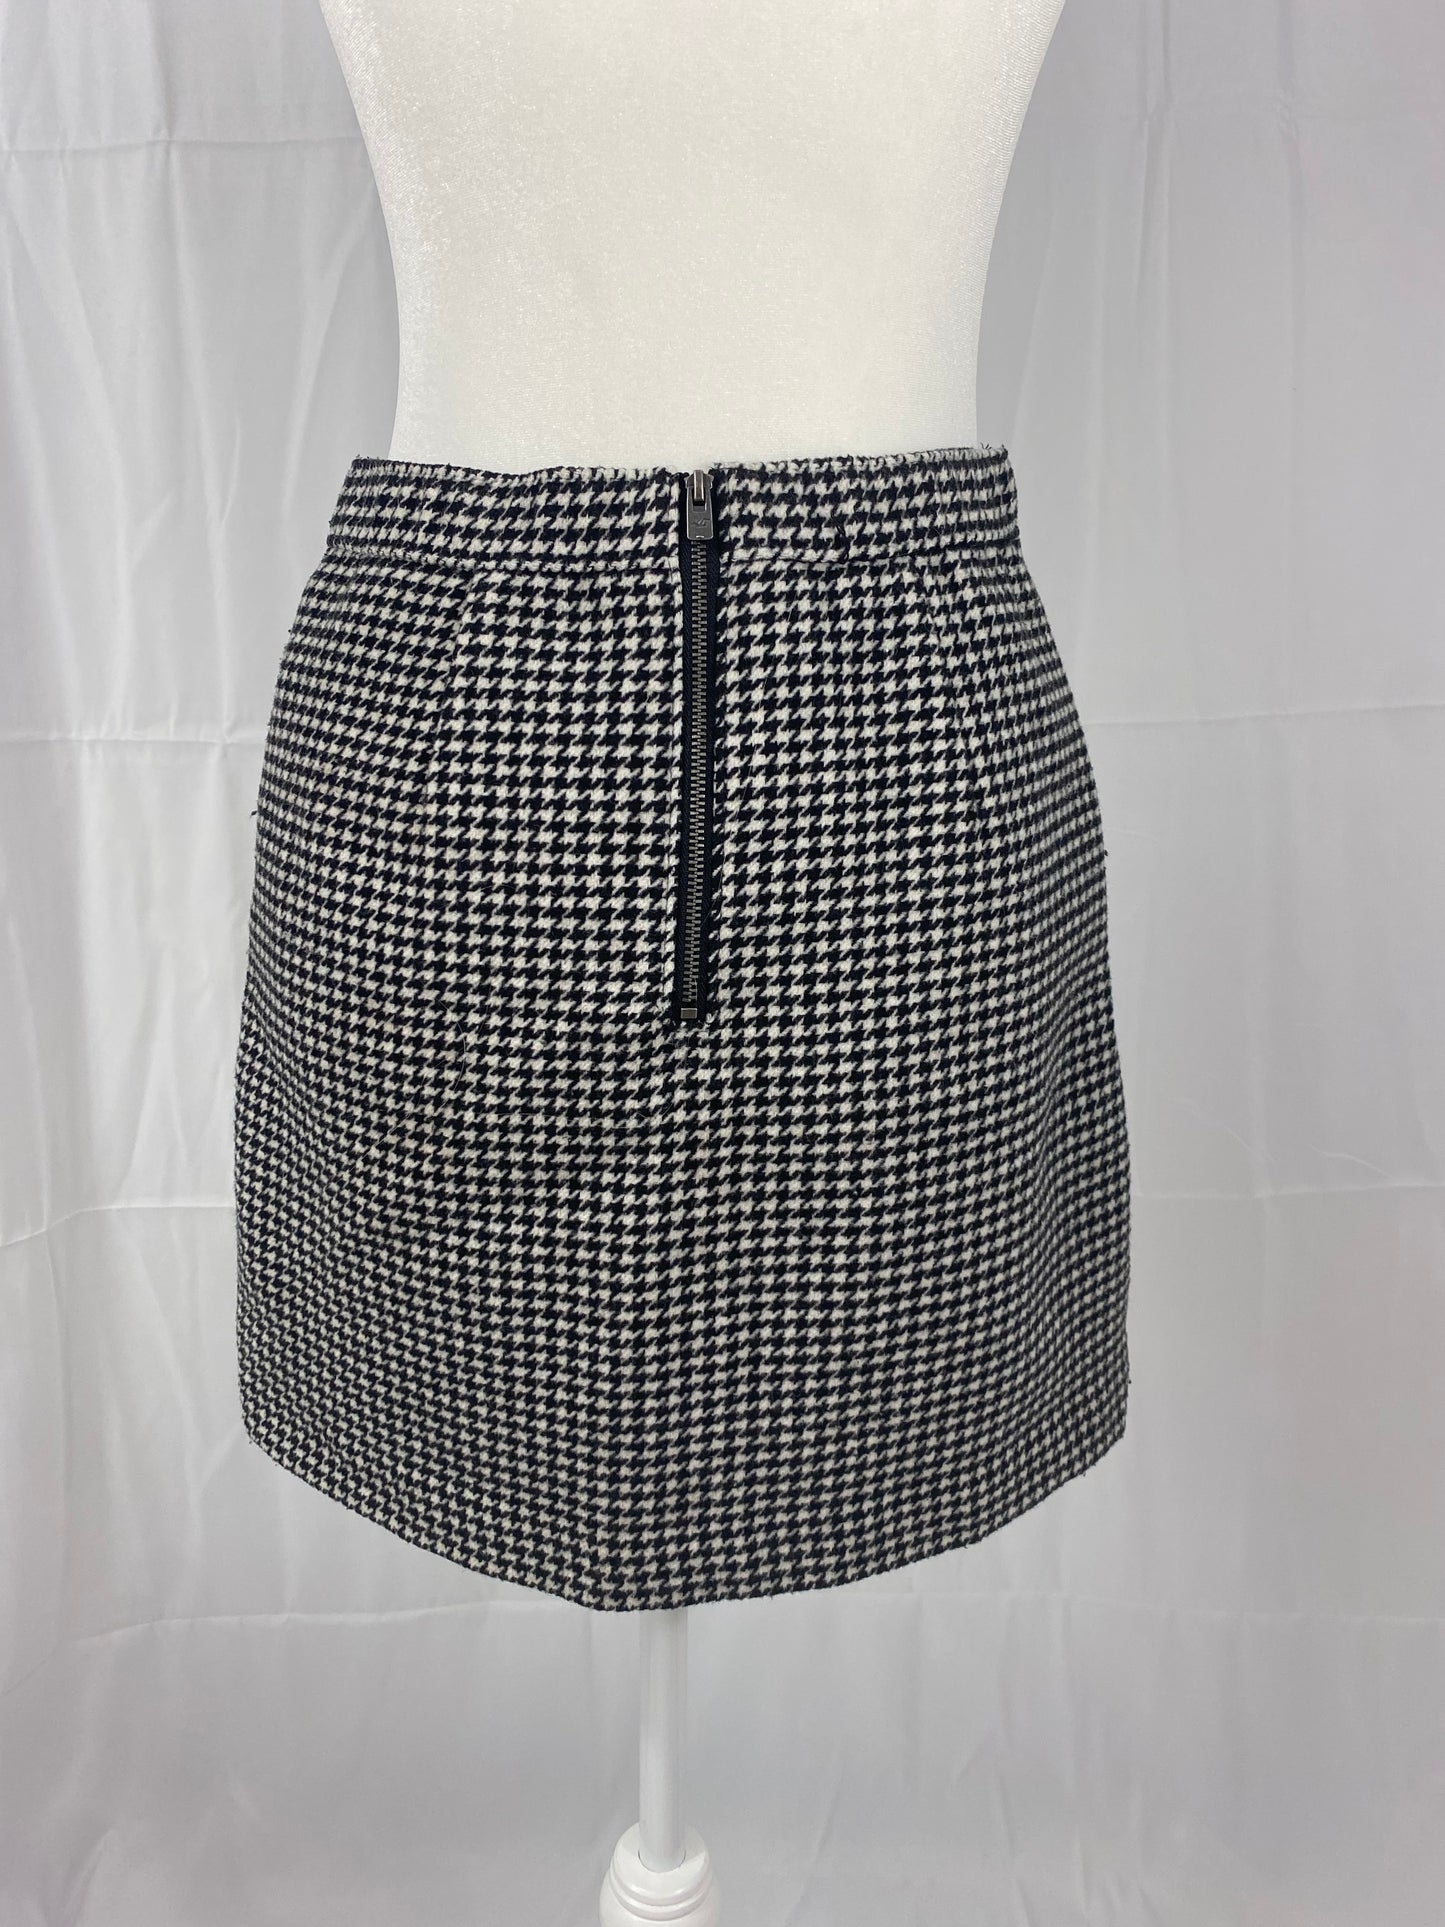 Hollister checkered skirt